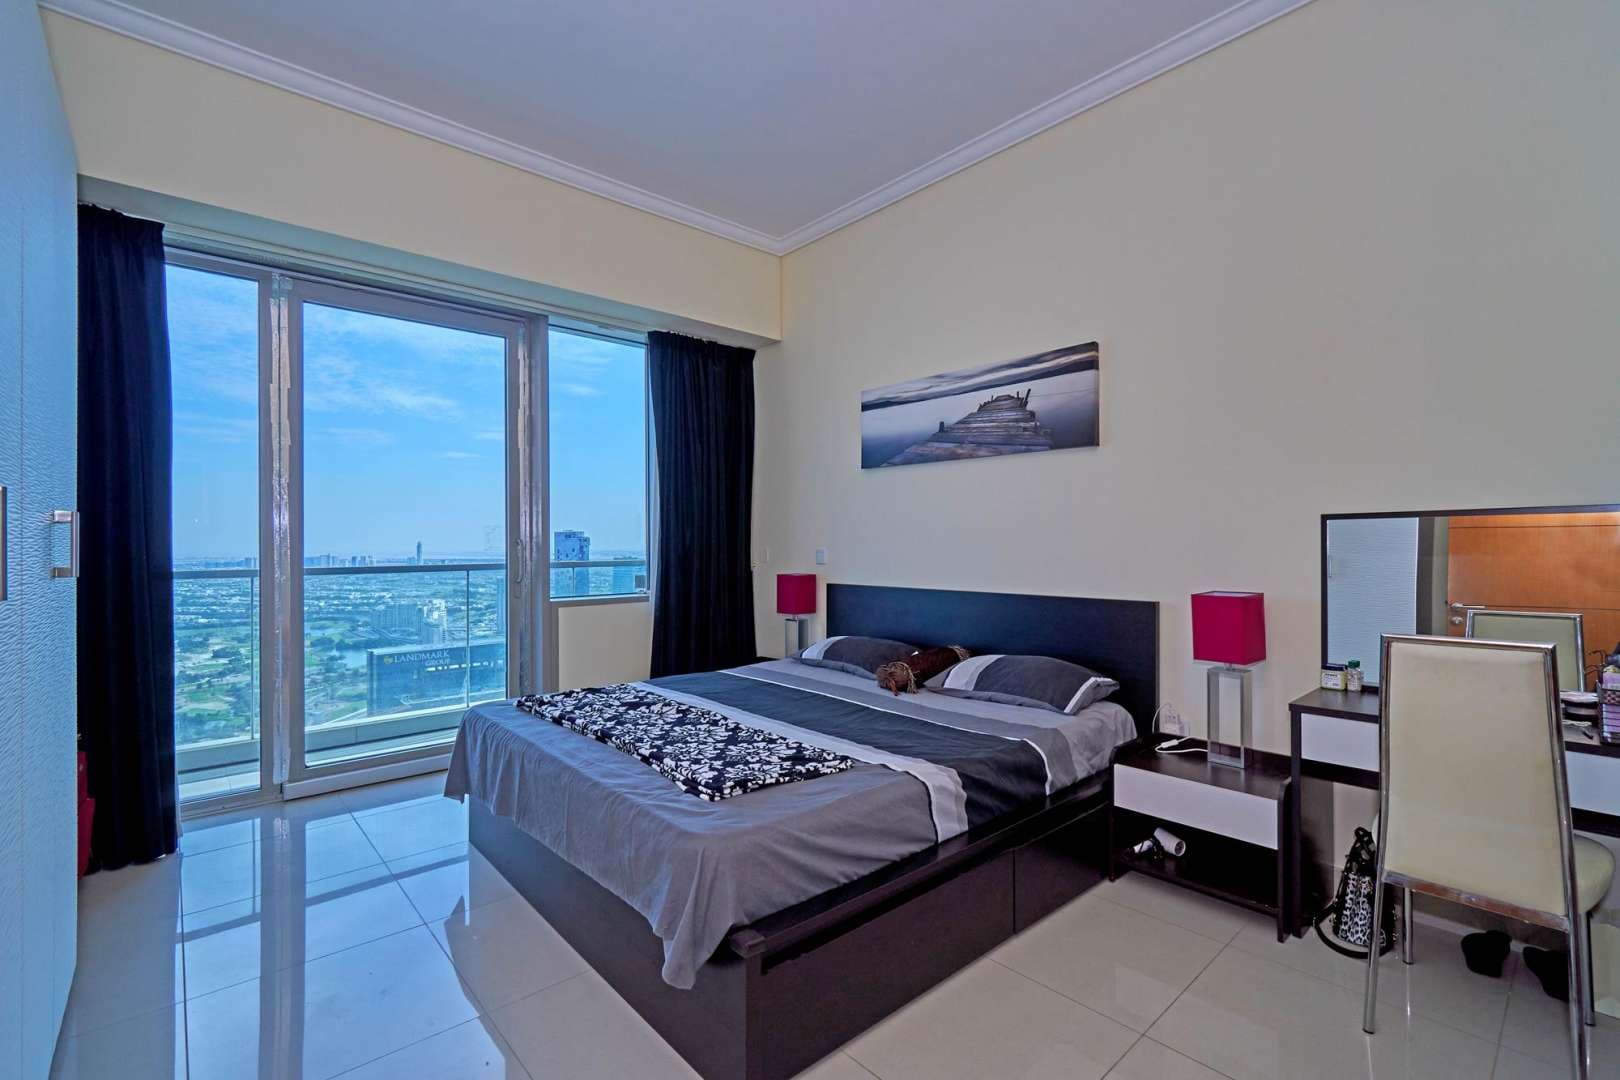 1 Bedroom Apartment For Rent Ocean Heights Lp05490 2bc9fb4cb0f50e00.jpg